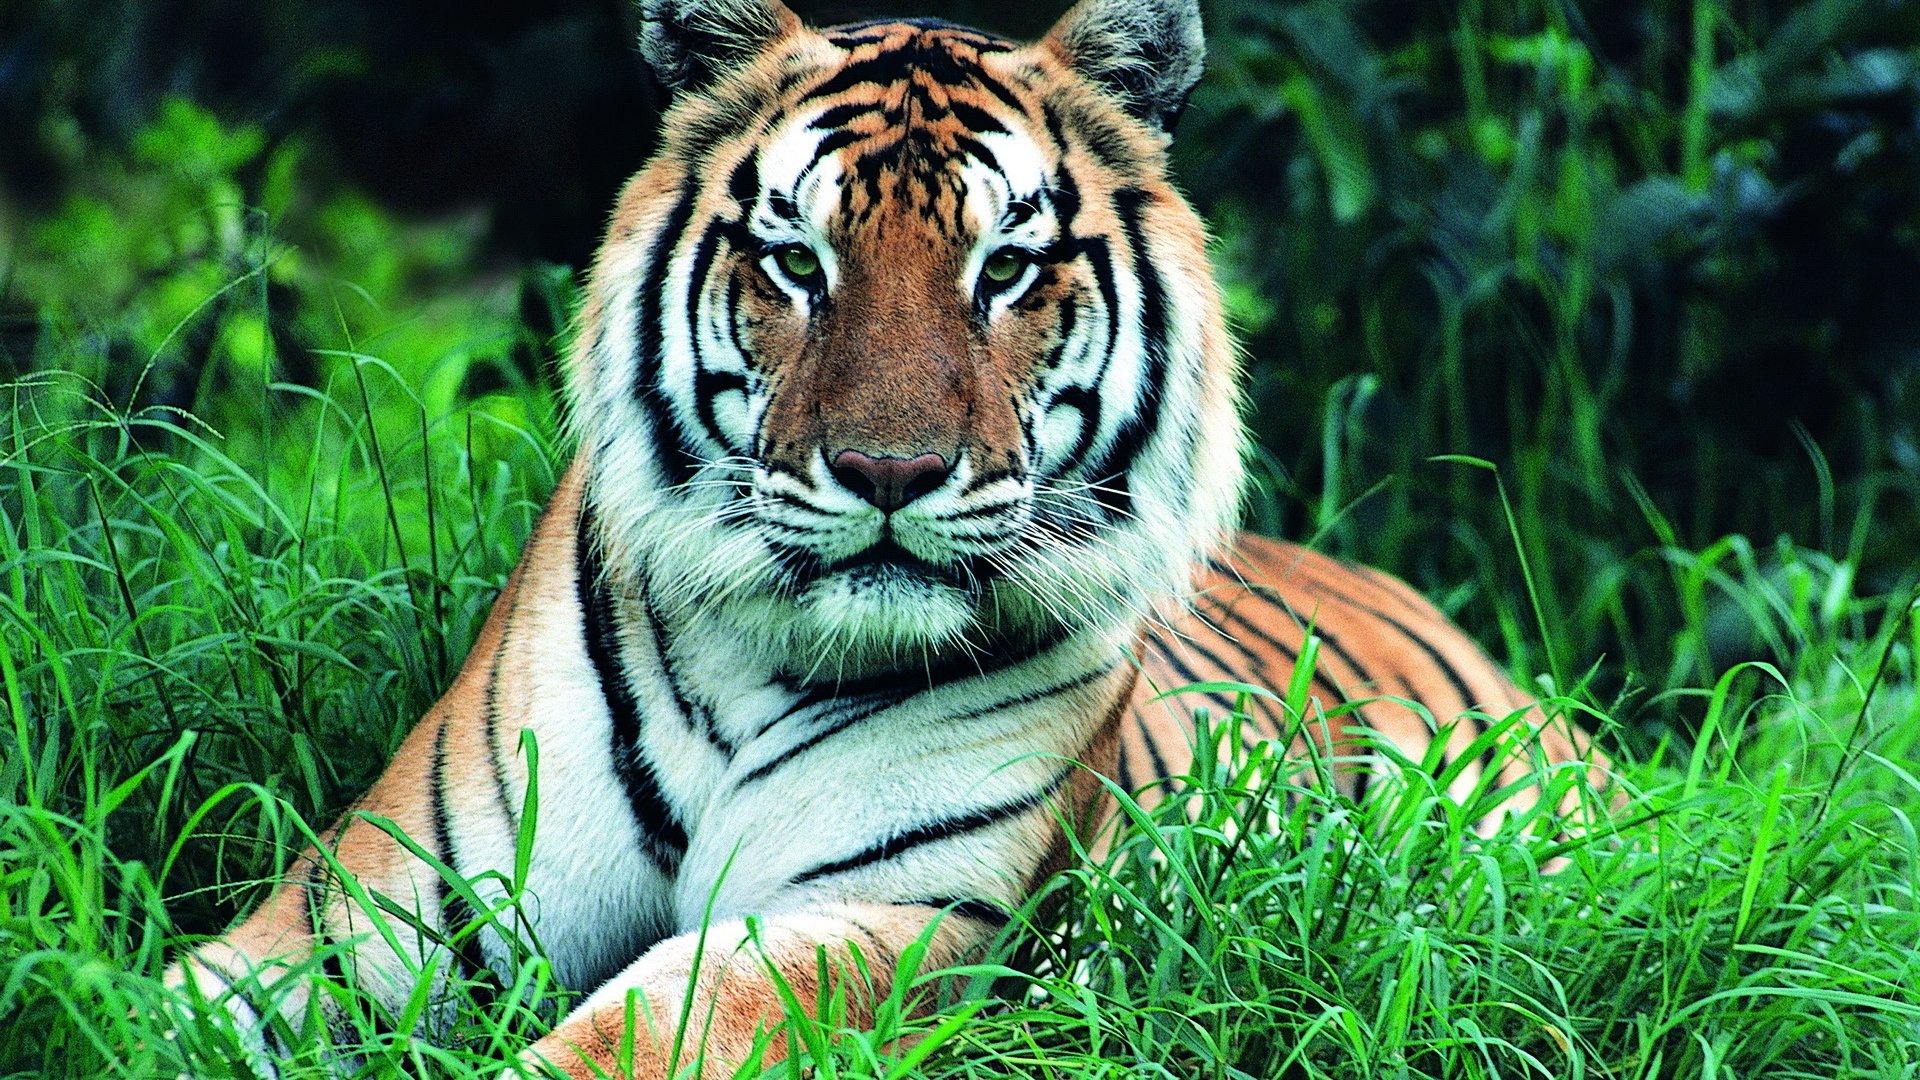 tigers, animals Image for desktop